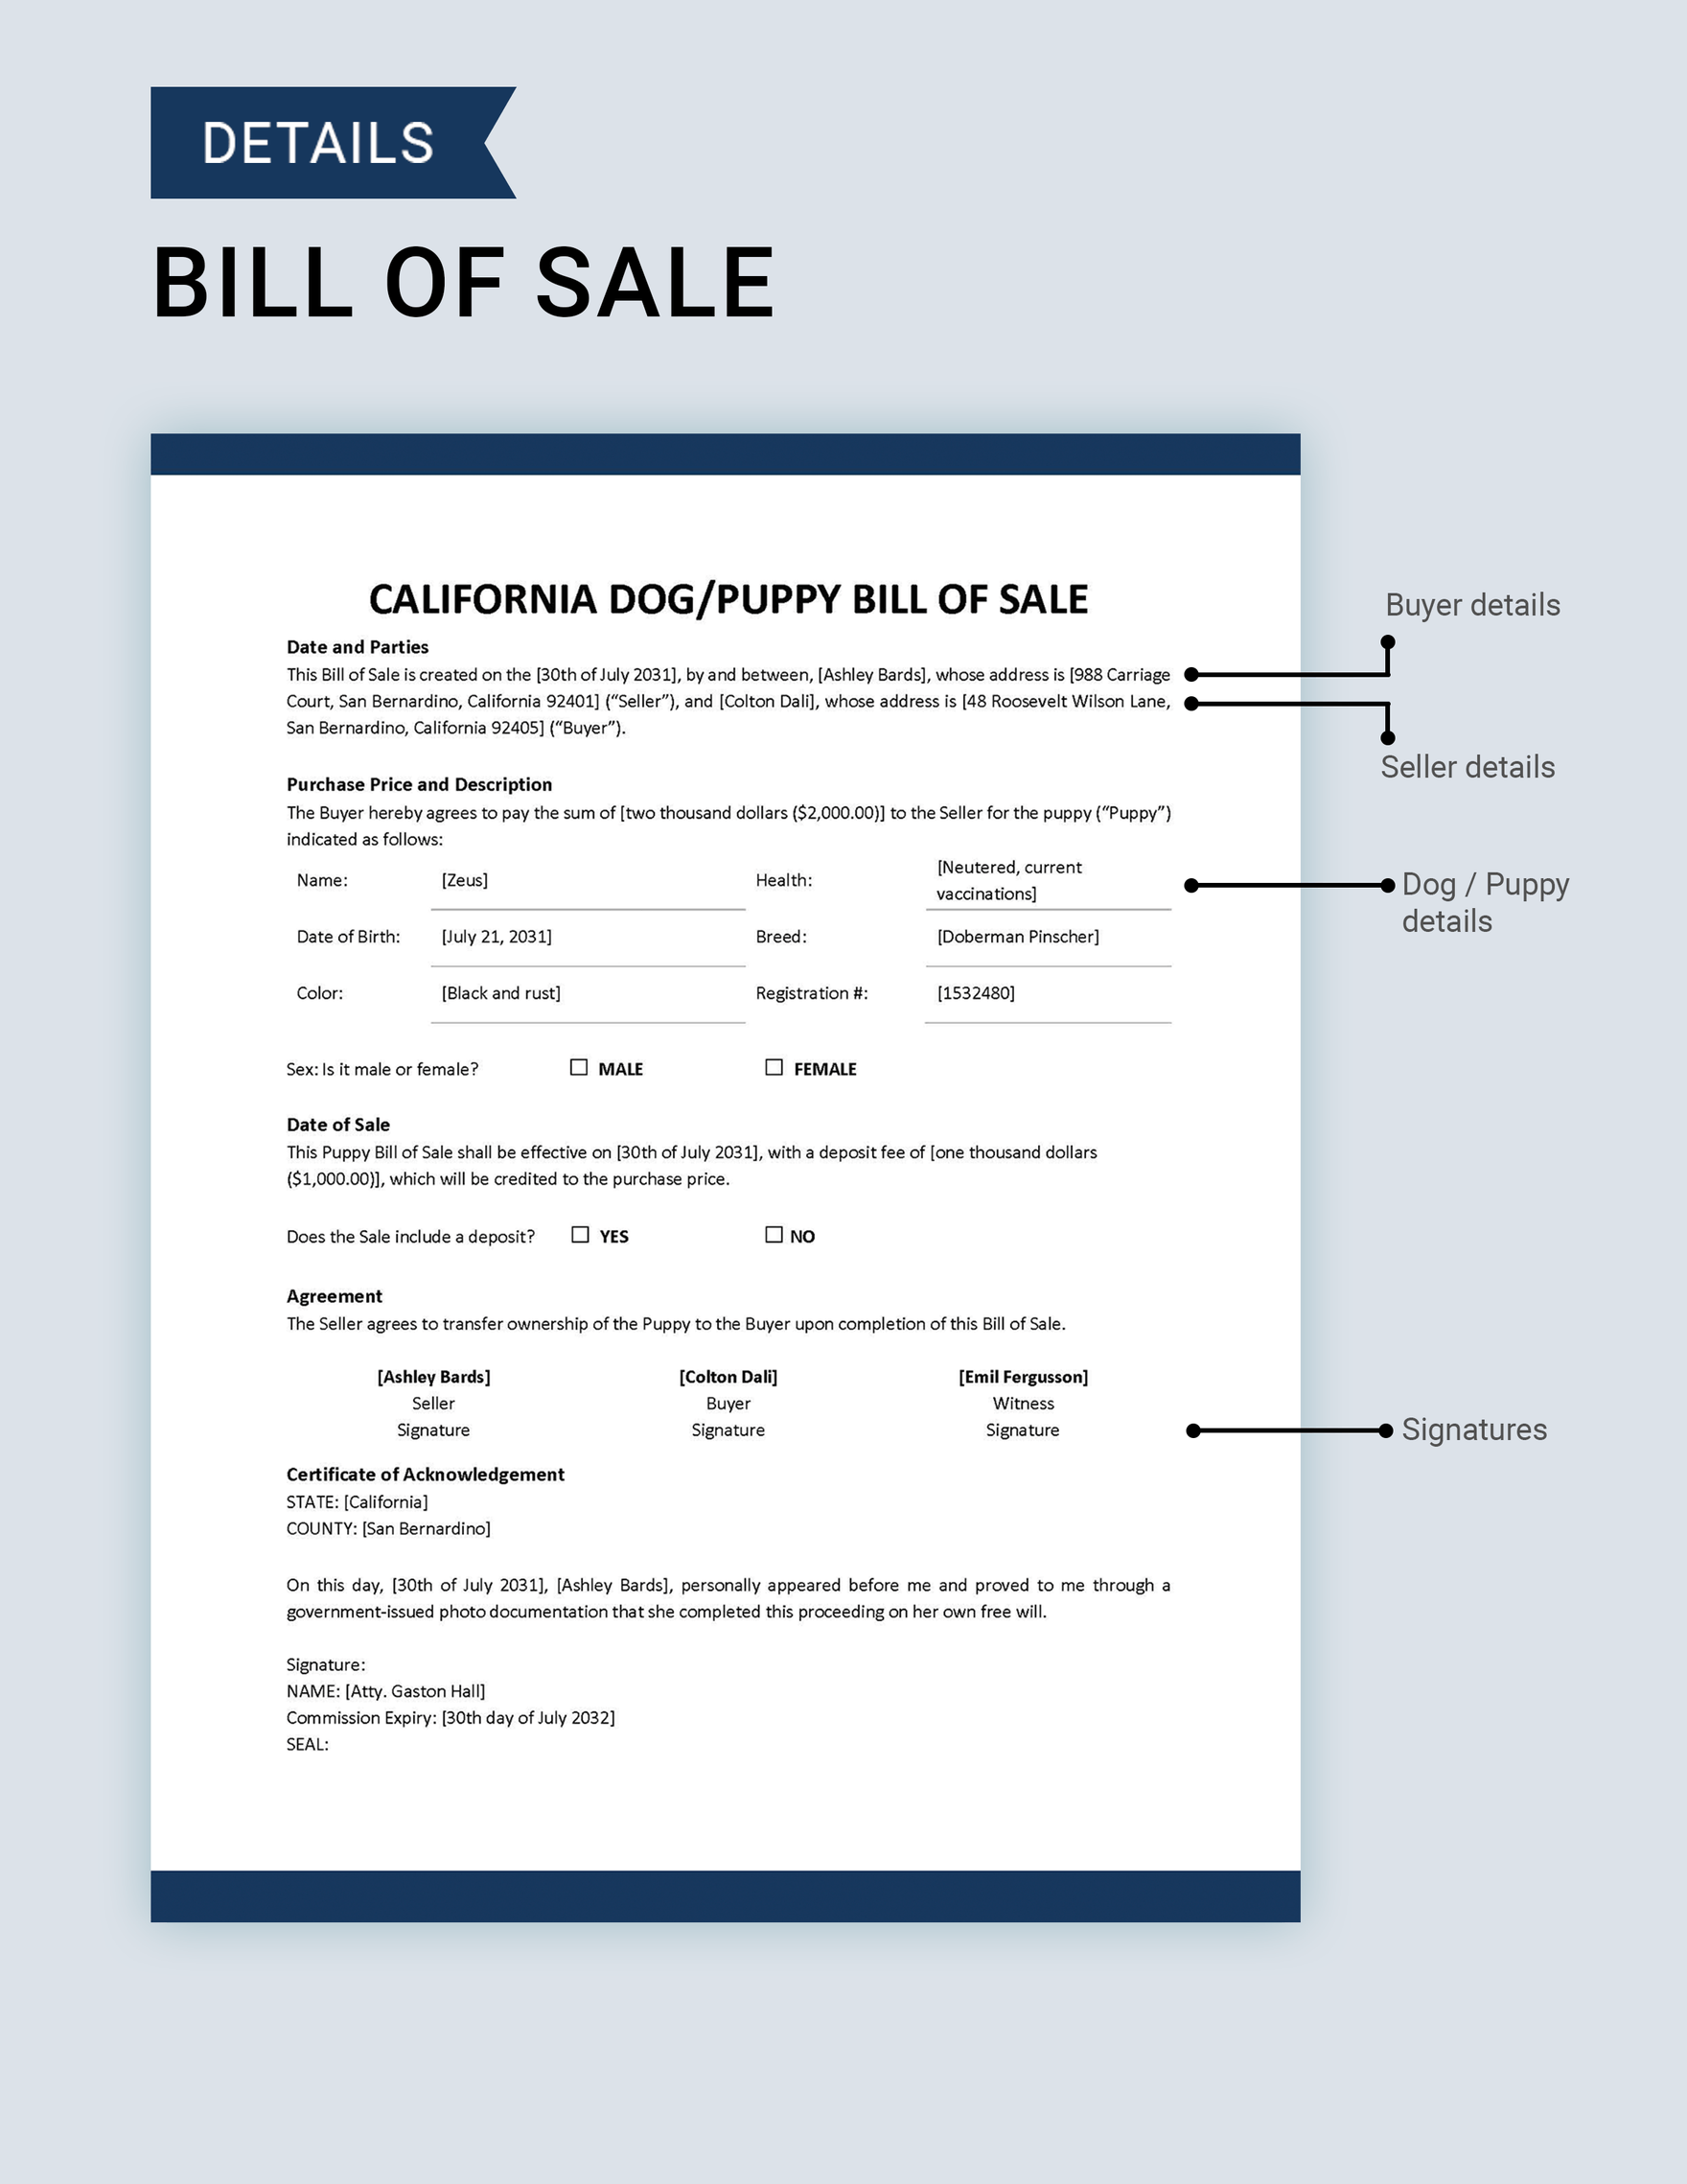 California Dog / Puppy Bill of Sale Template